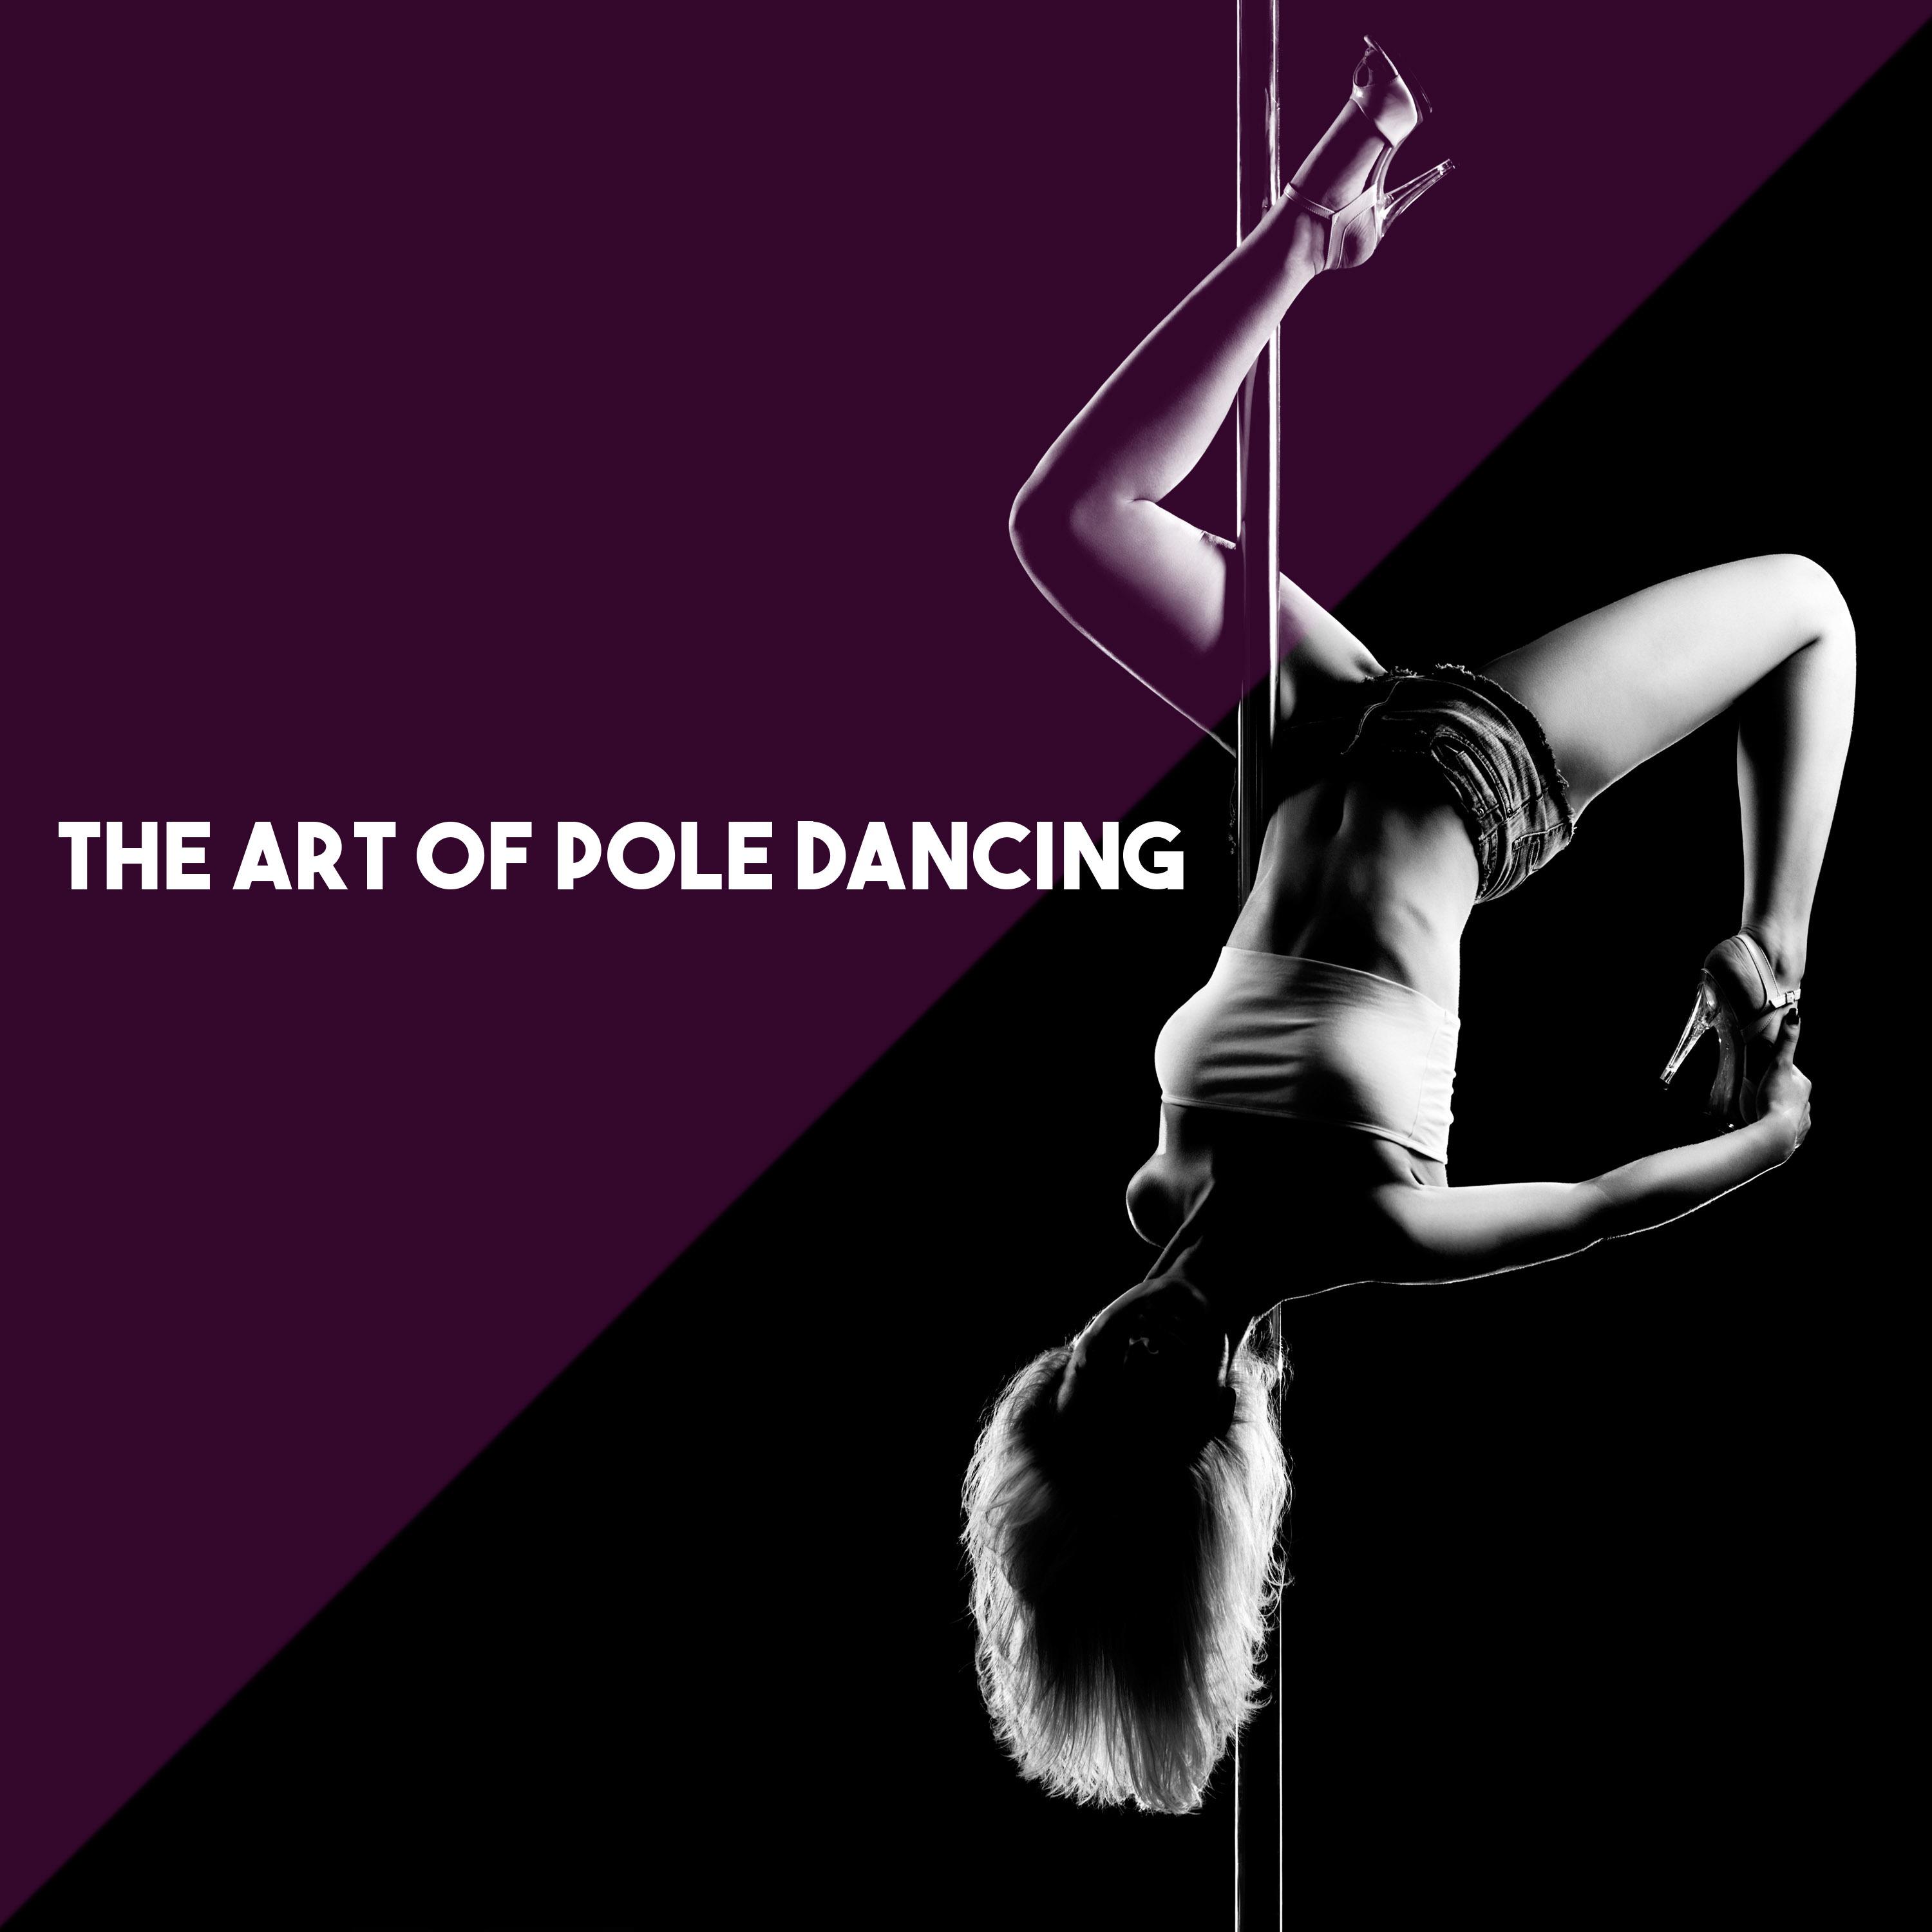 The Art of Pole Dancing